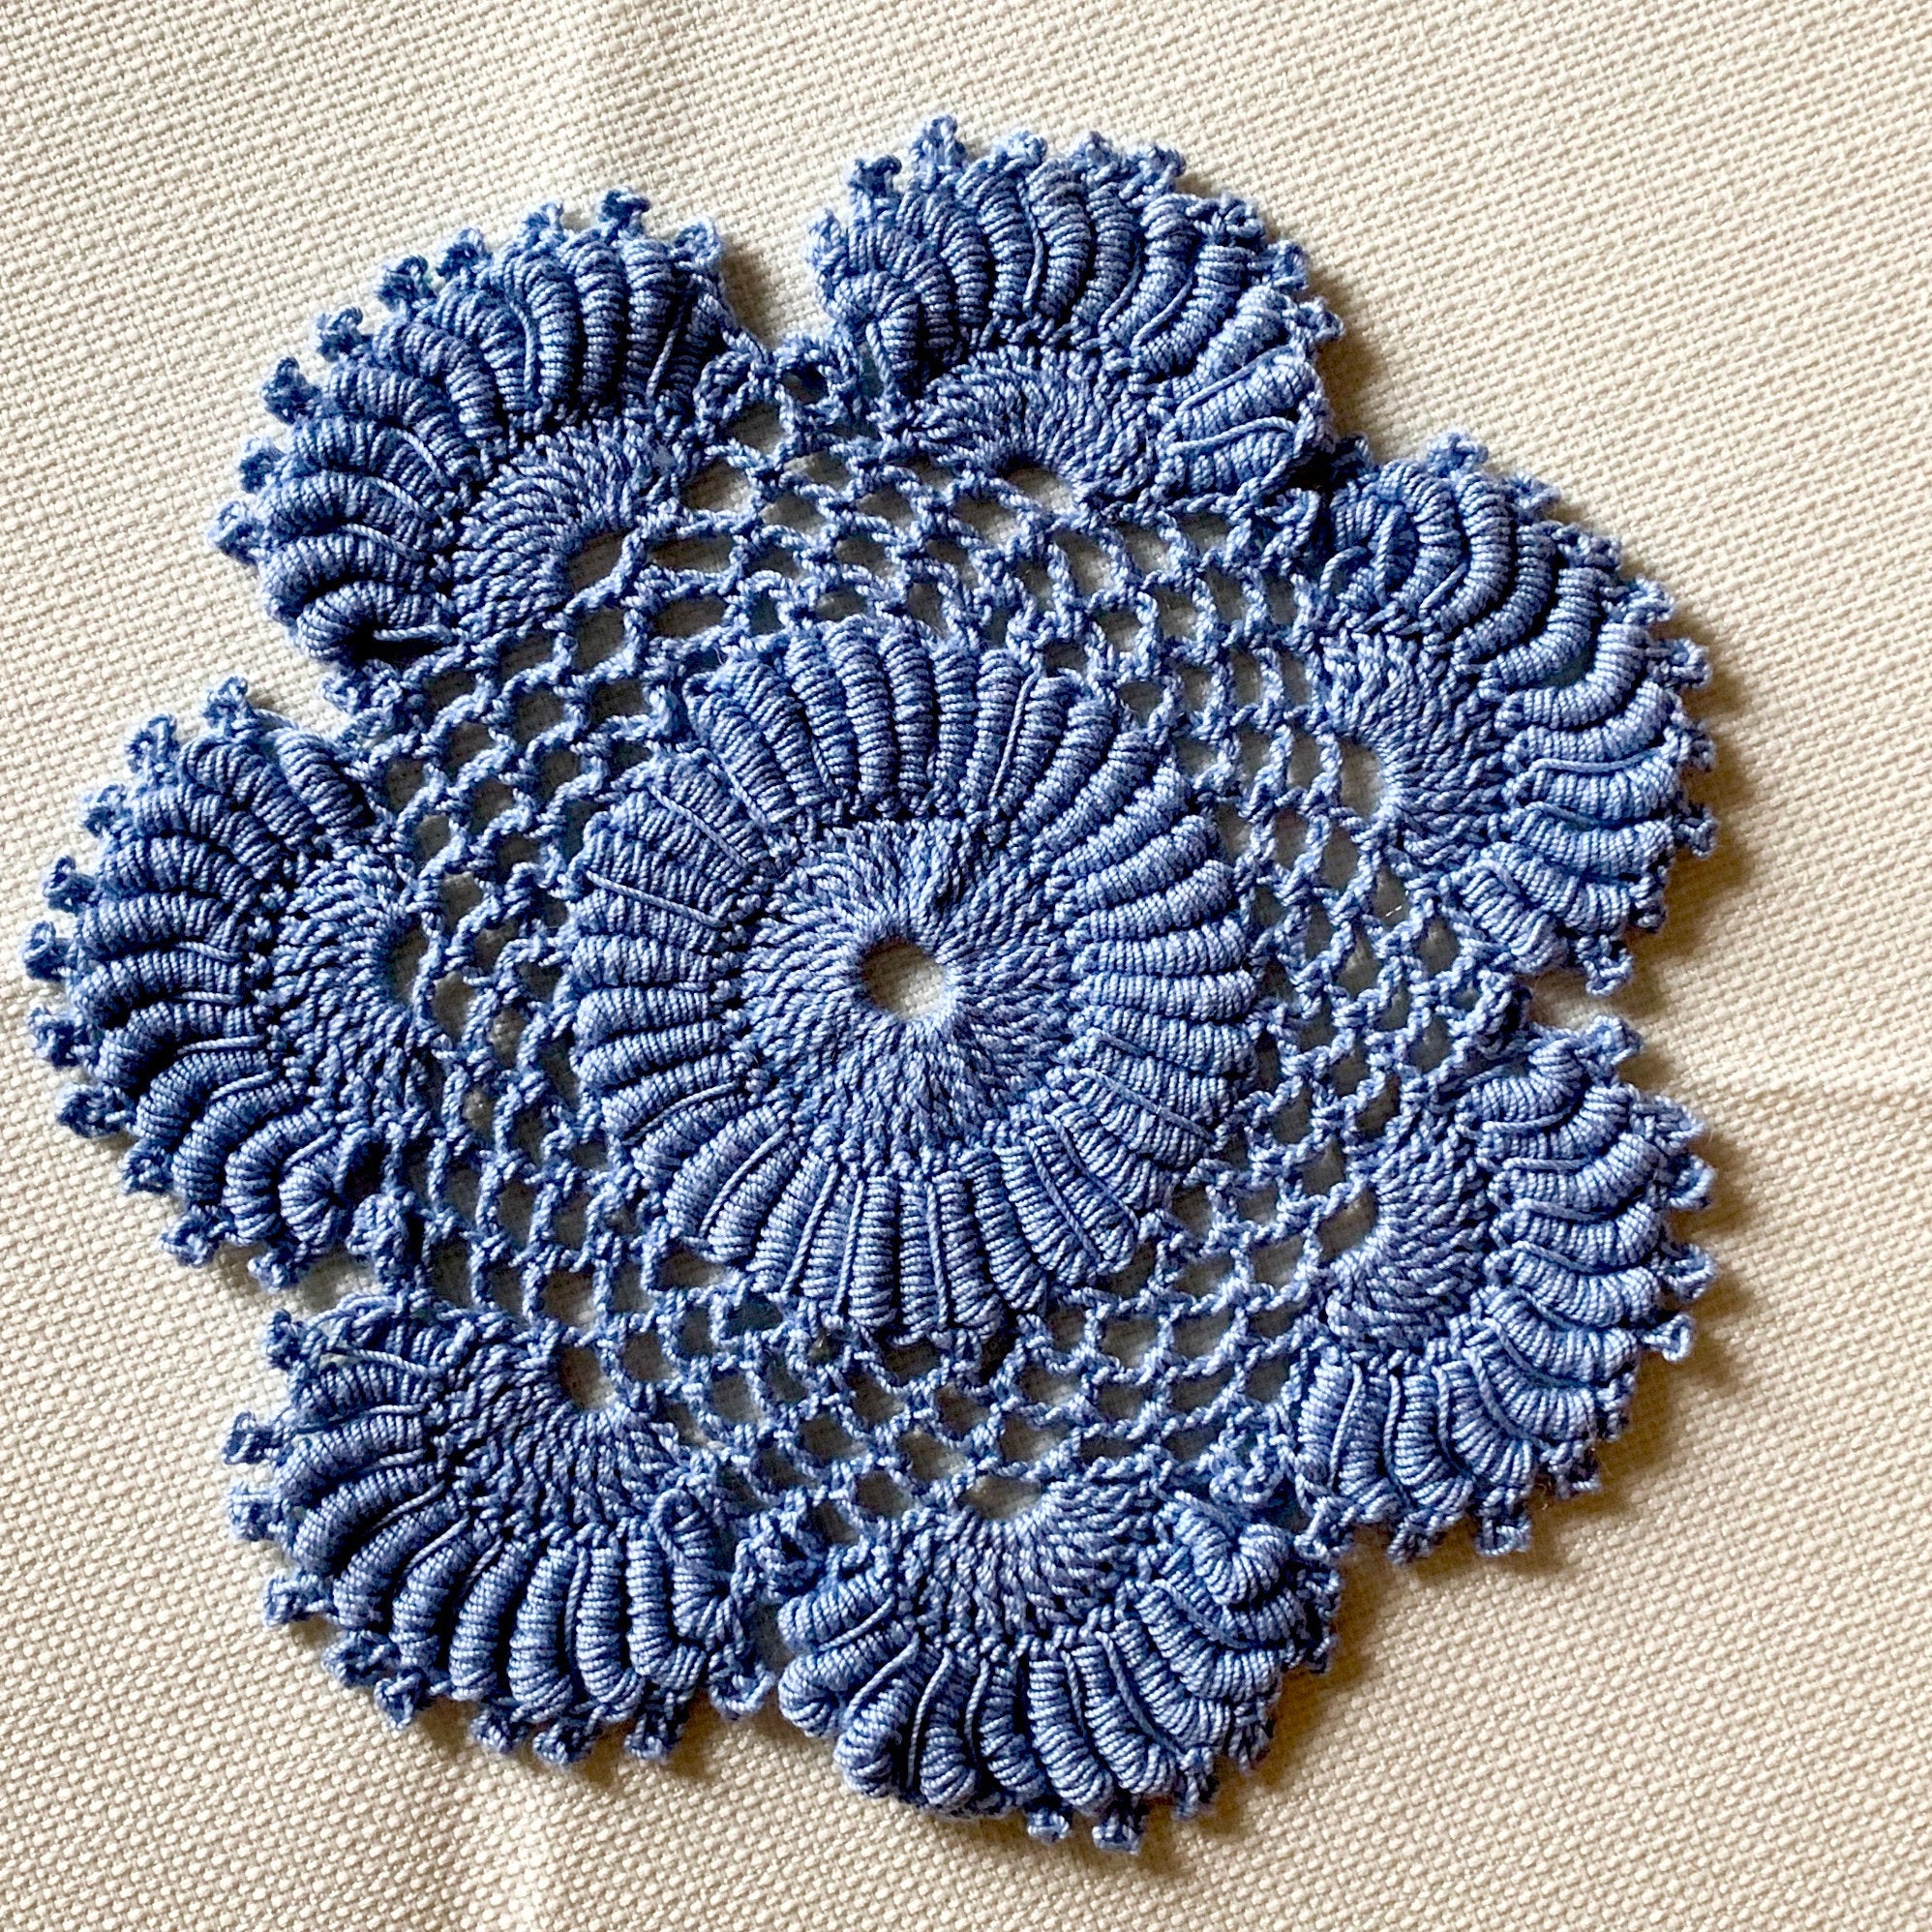 Ecru Round Crochet Doilies Set of 2-6 1/2“ Dimensional Doily- Ecru Round Doilies-Ecru (off white) Doily